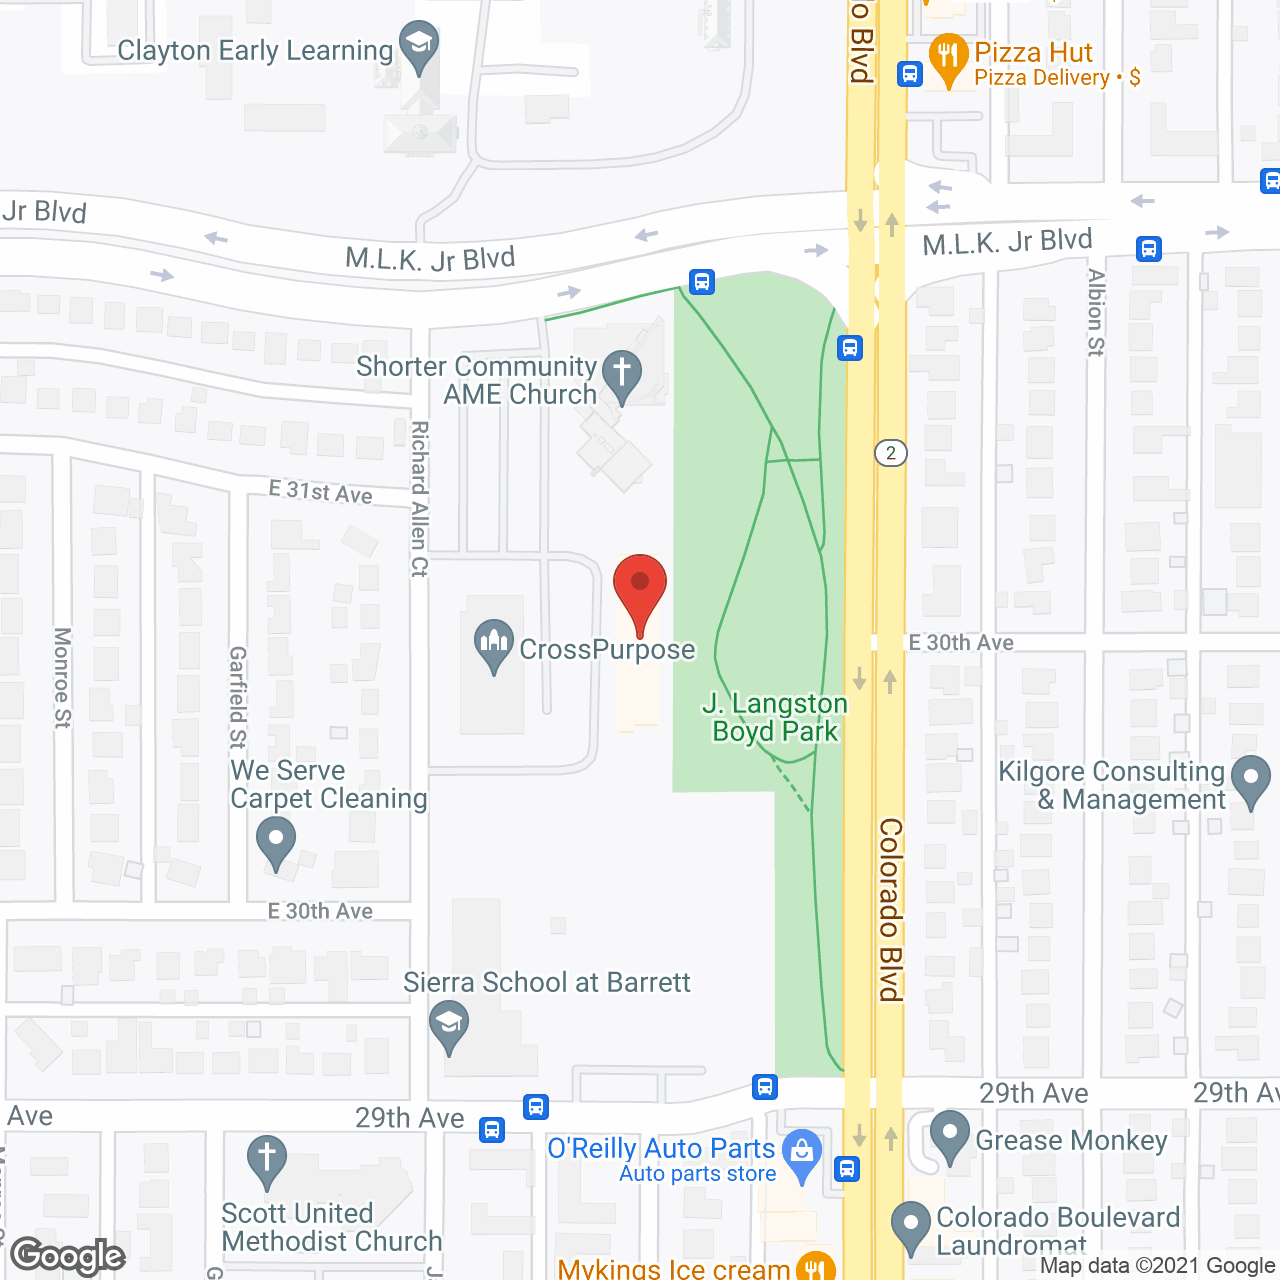 Allen Gardens in google map